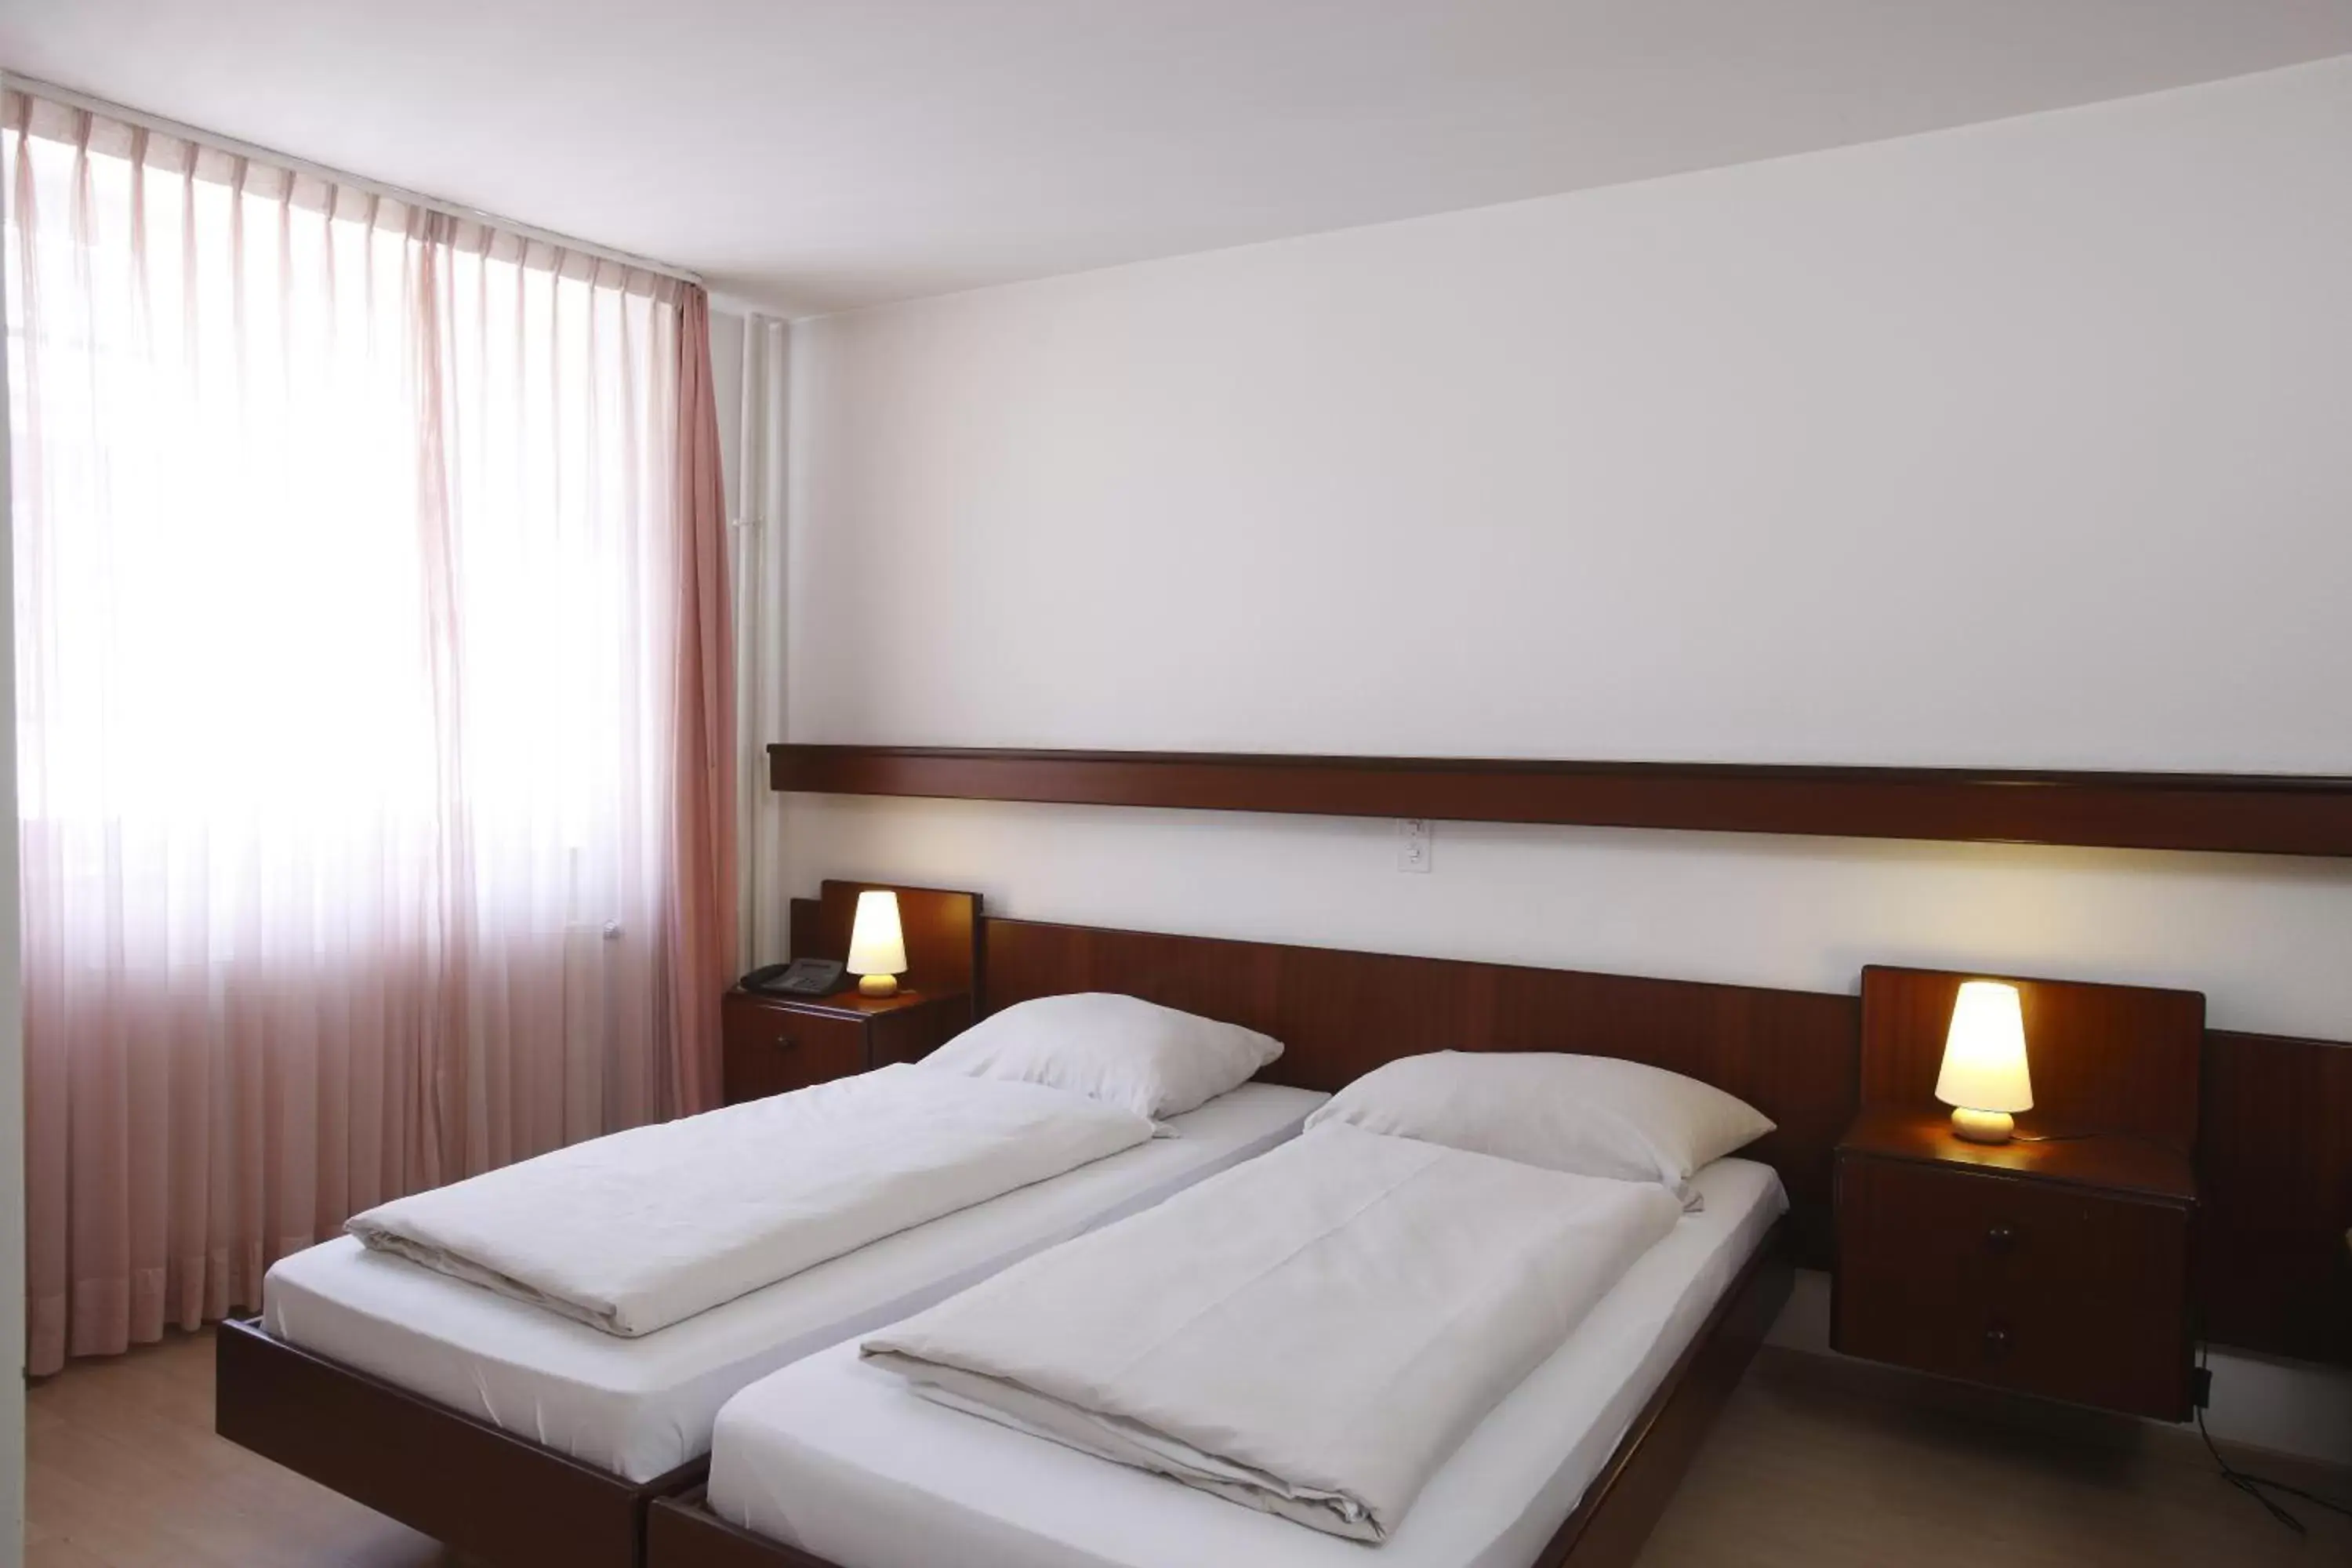 Bedroom, Bed in Spalenbrunnen Hotel & Restaurant Basel City Center